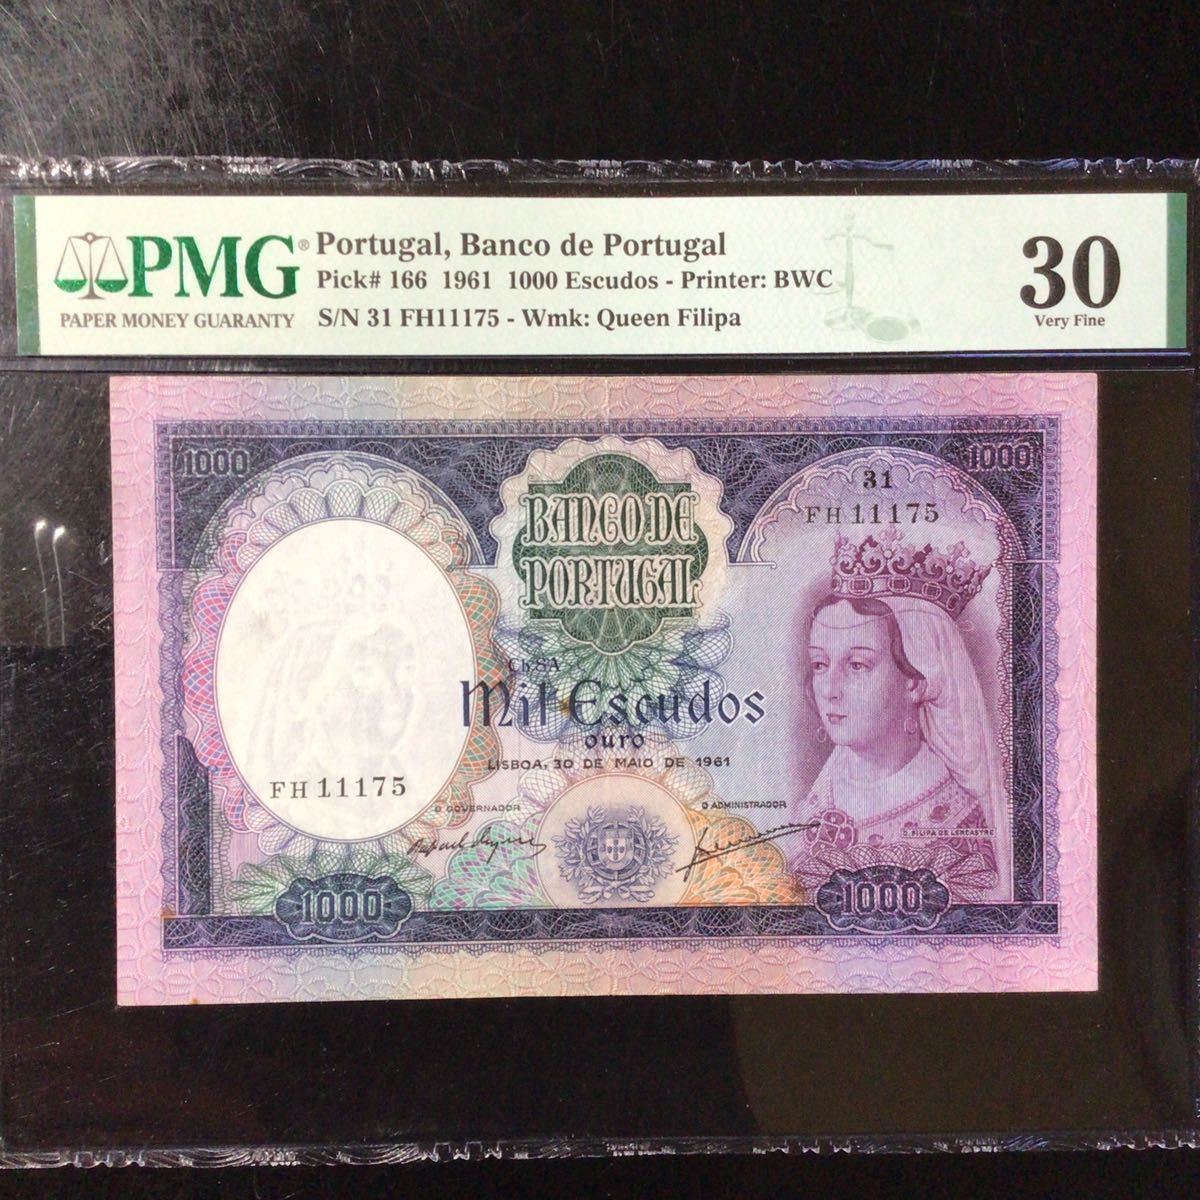 World Banknote Grading PORTUGAL《Banco Portugal》1000 Escudos【1961】『PMG Grading Very Fine 30』のサムネイル